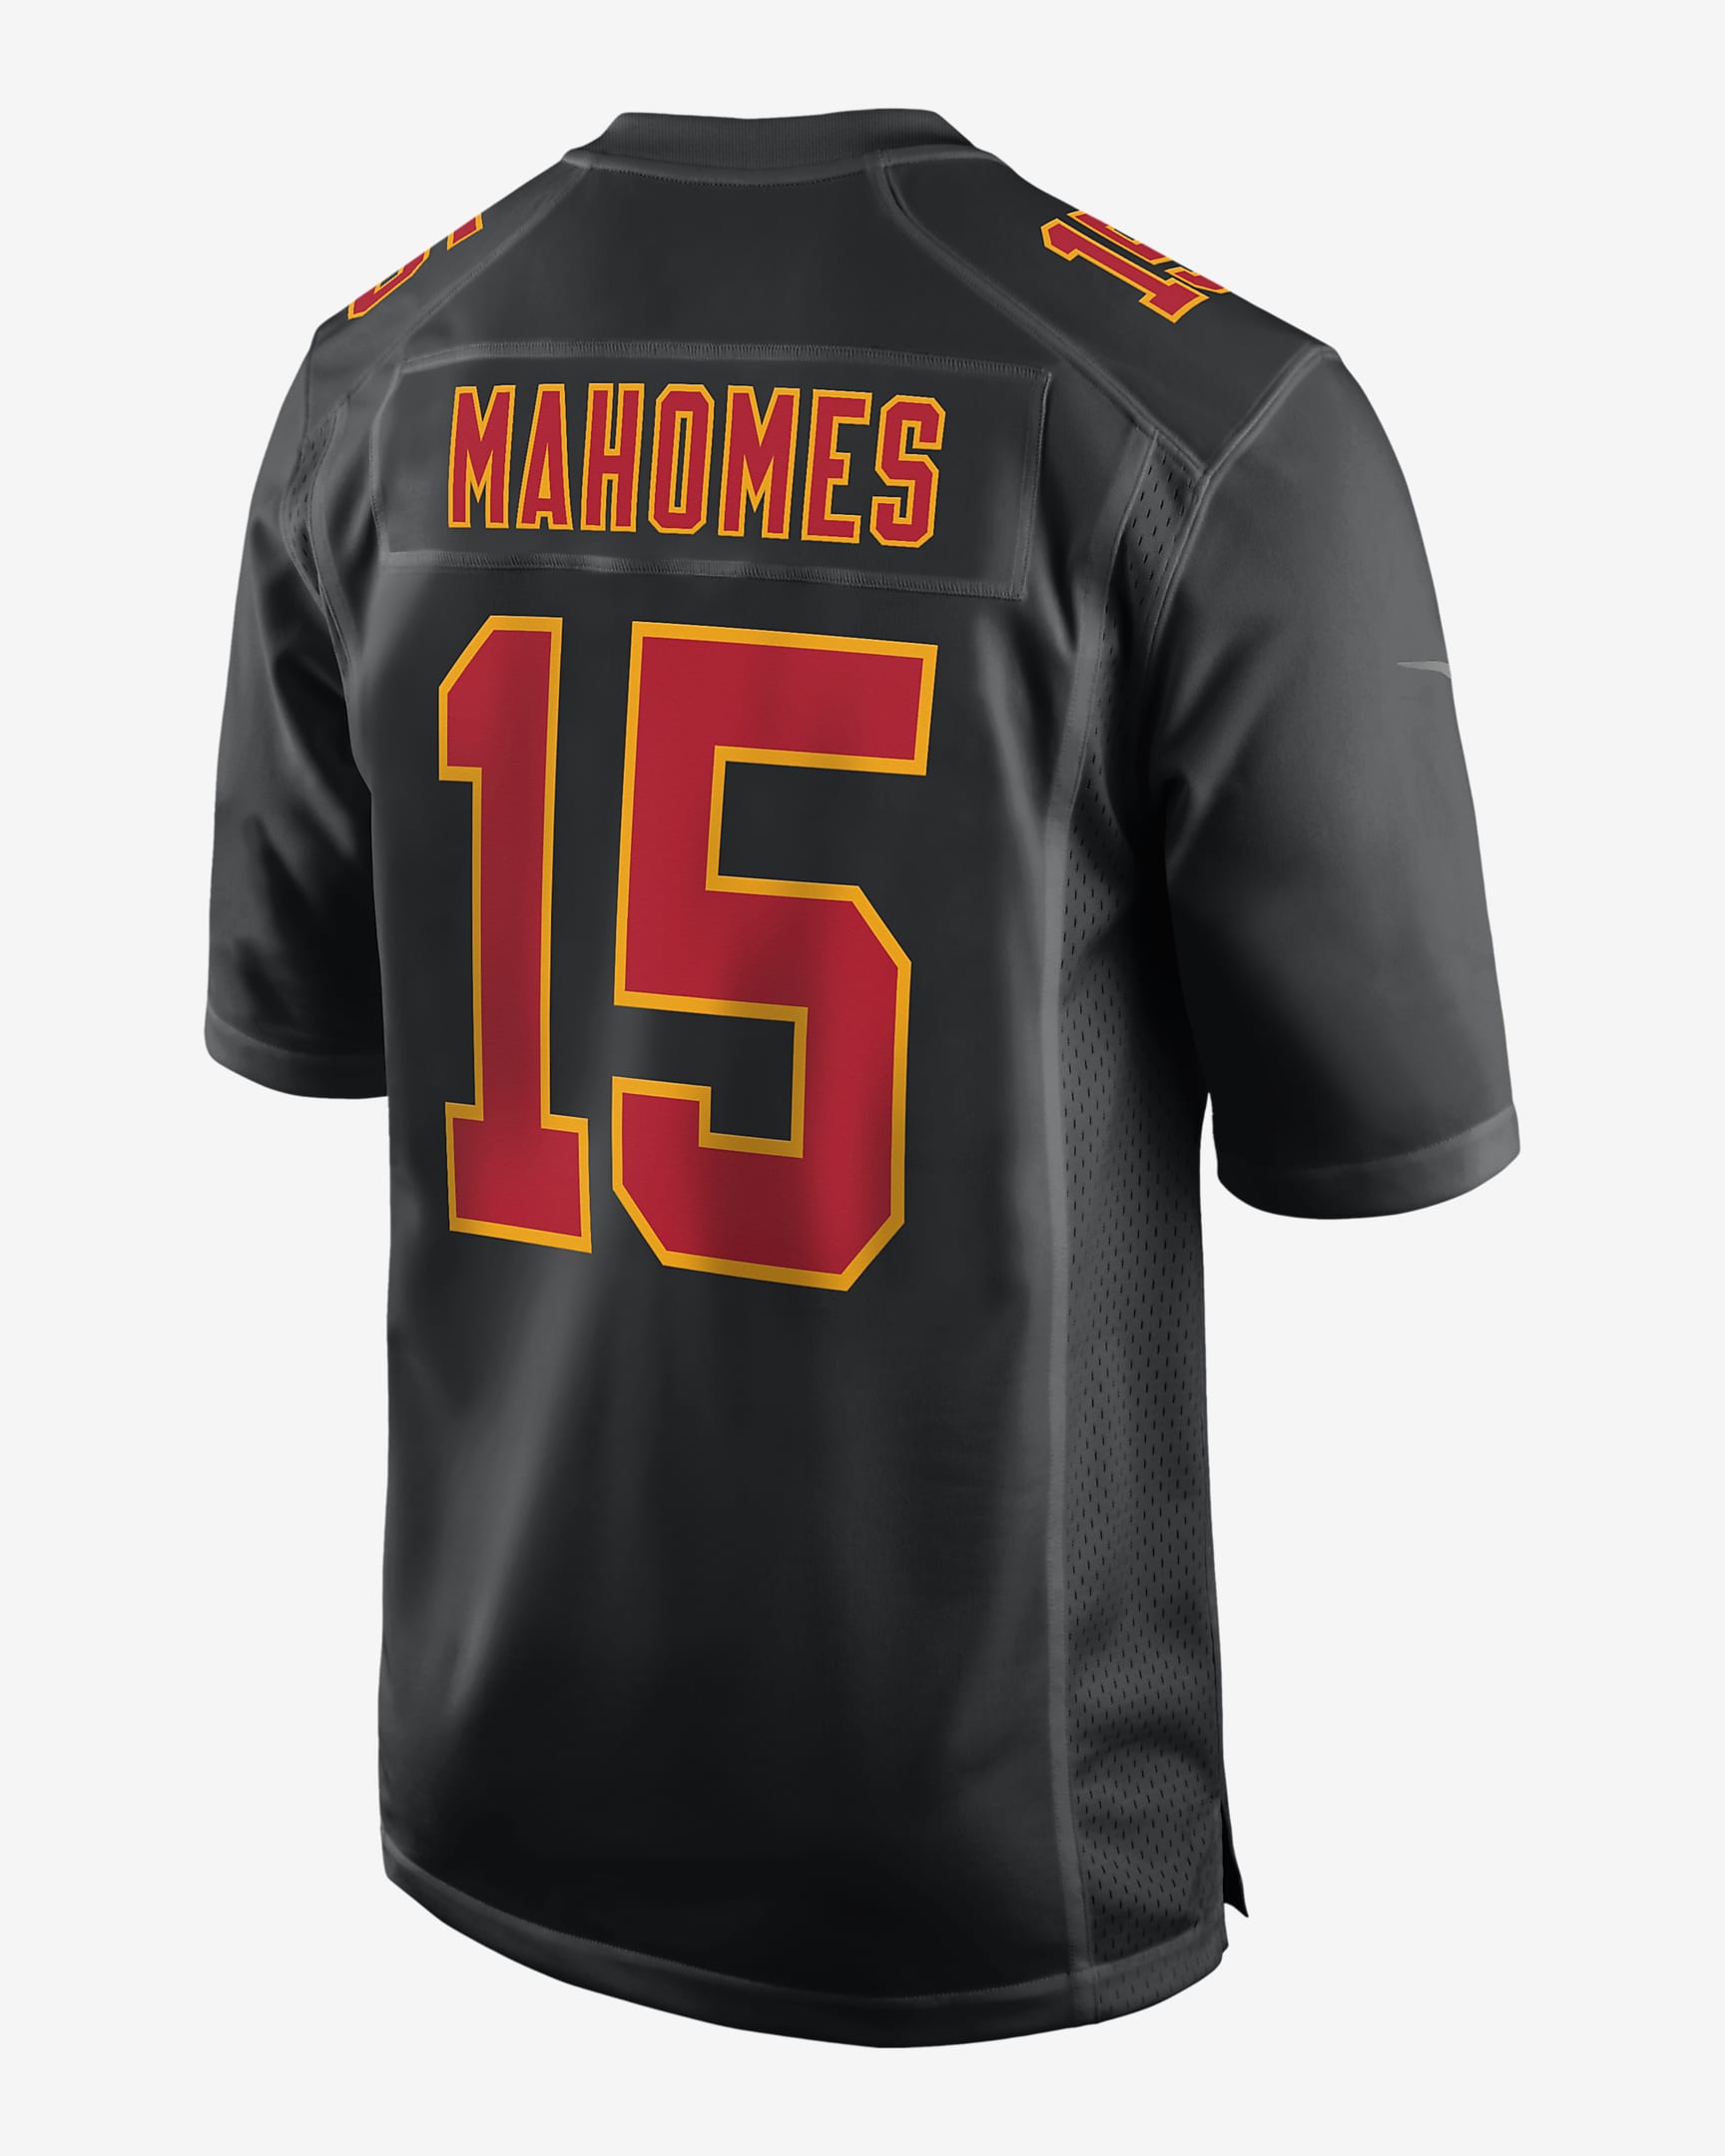 Jersey Game Nike de la NFL para hombre Patrick Mahomes Kansas City ...